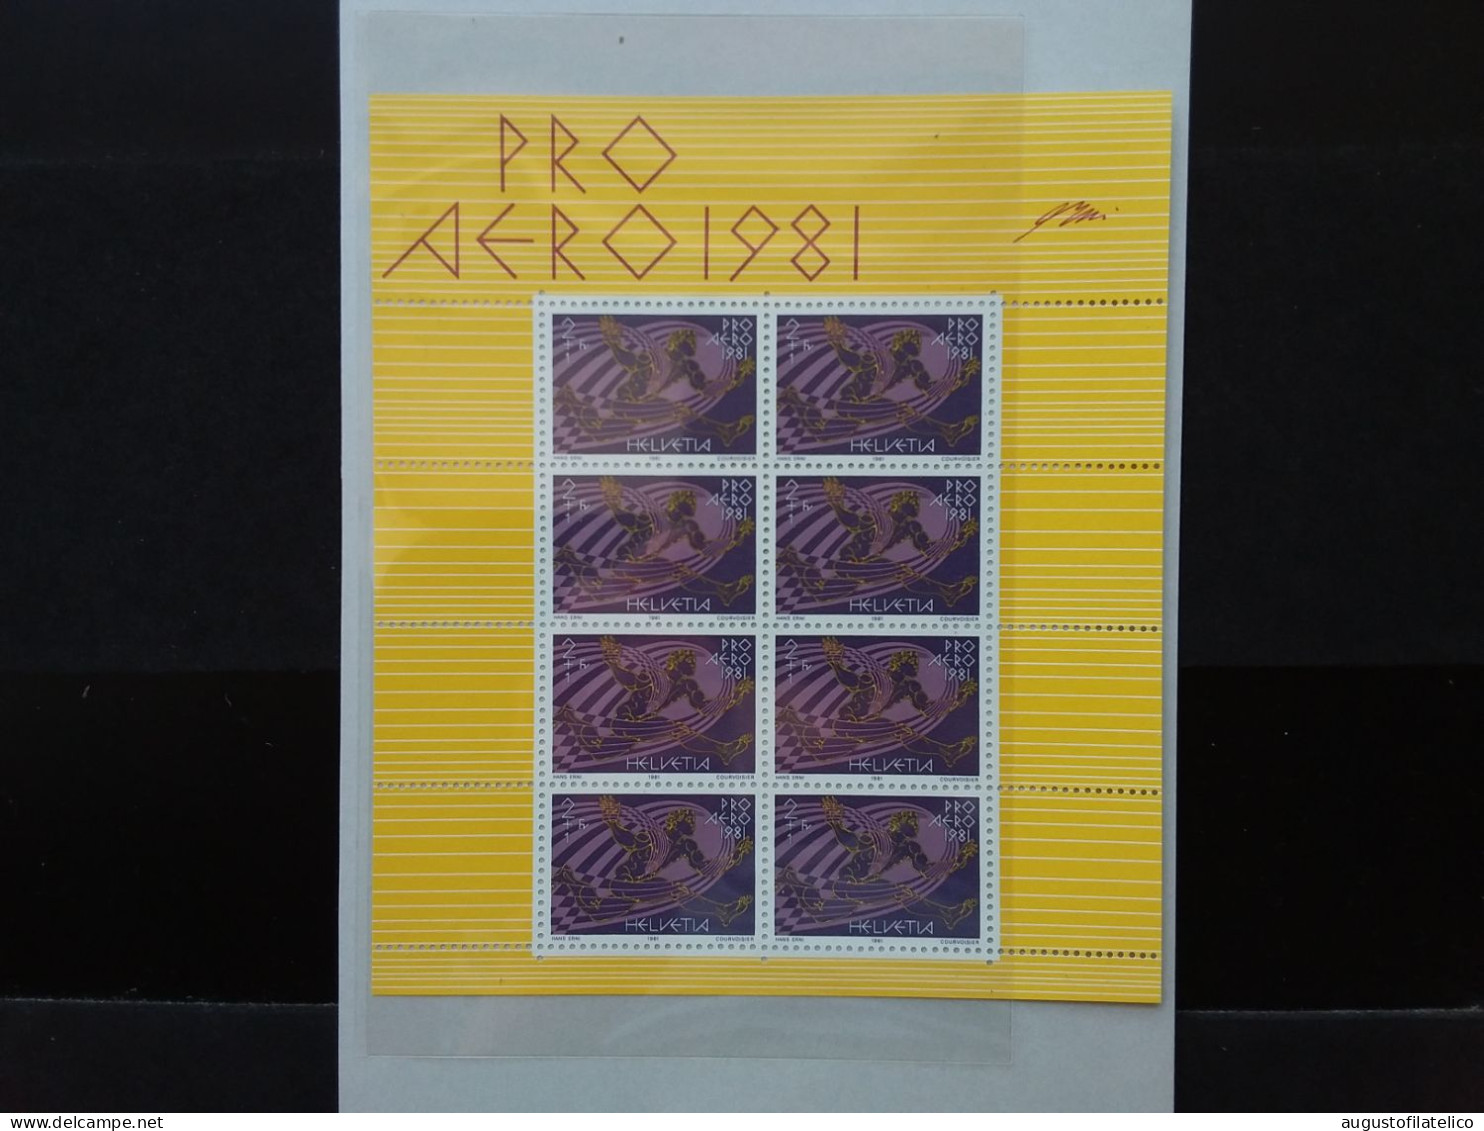 SVIZZERA - BF Pro Aereo 1981 - Nuovo ** - Facciale Frs Sv 24,00 (sottofacciale) + Spese Postali - Blocks & Sheetlets & Panes